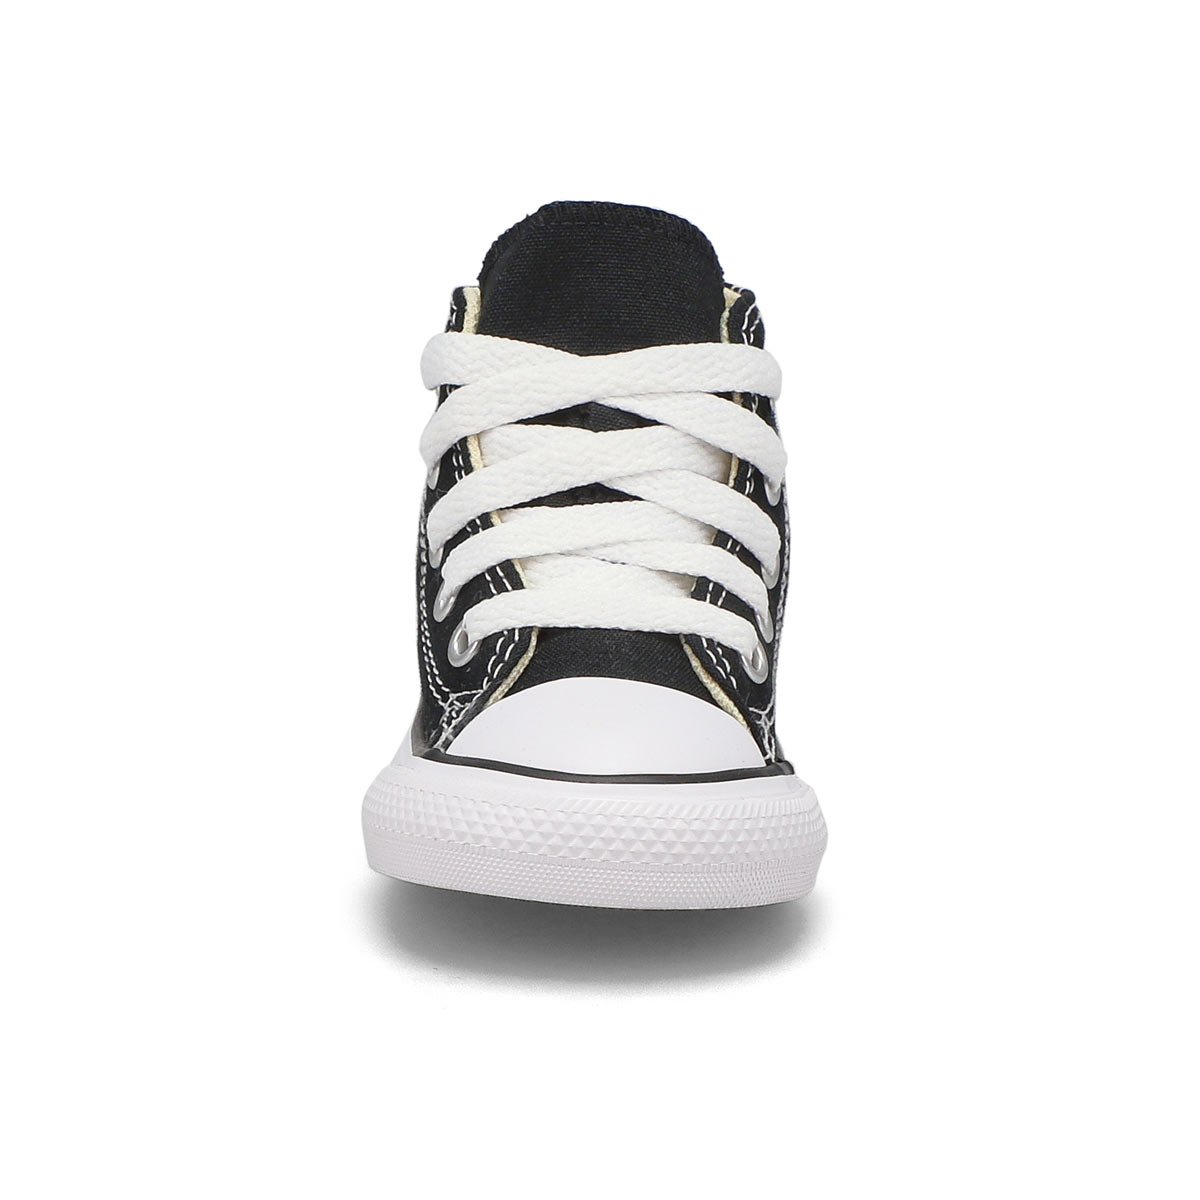 Infants' Chuck Taylor All Star Hi Top Sneaker - Black